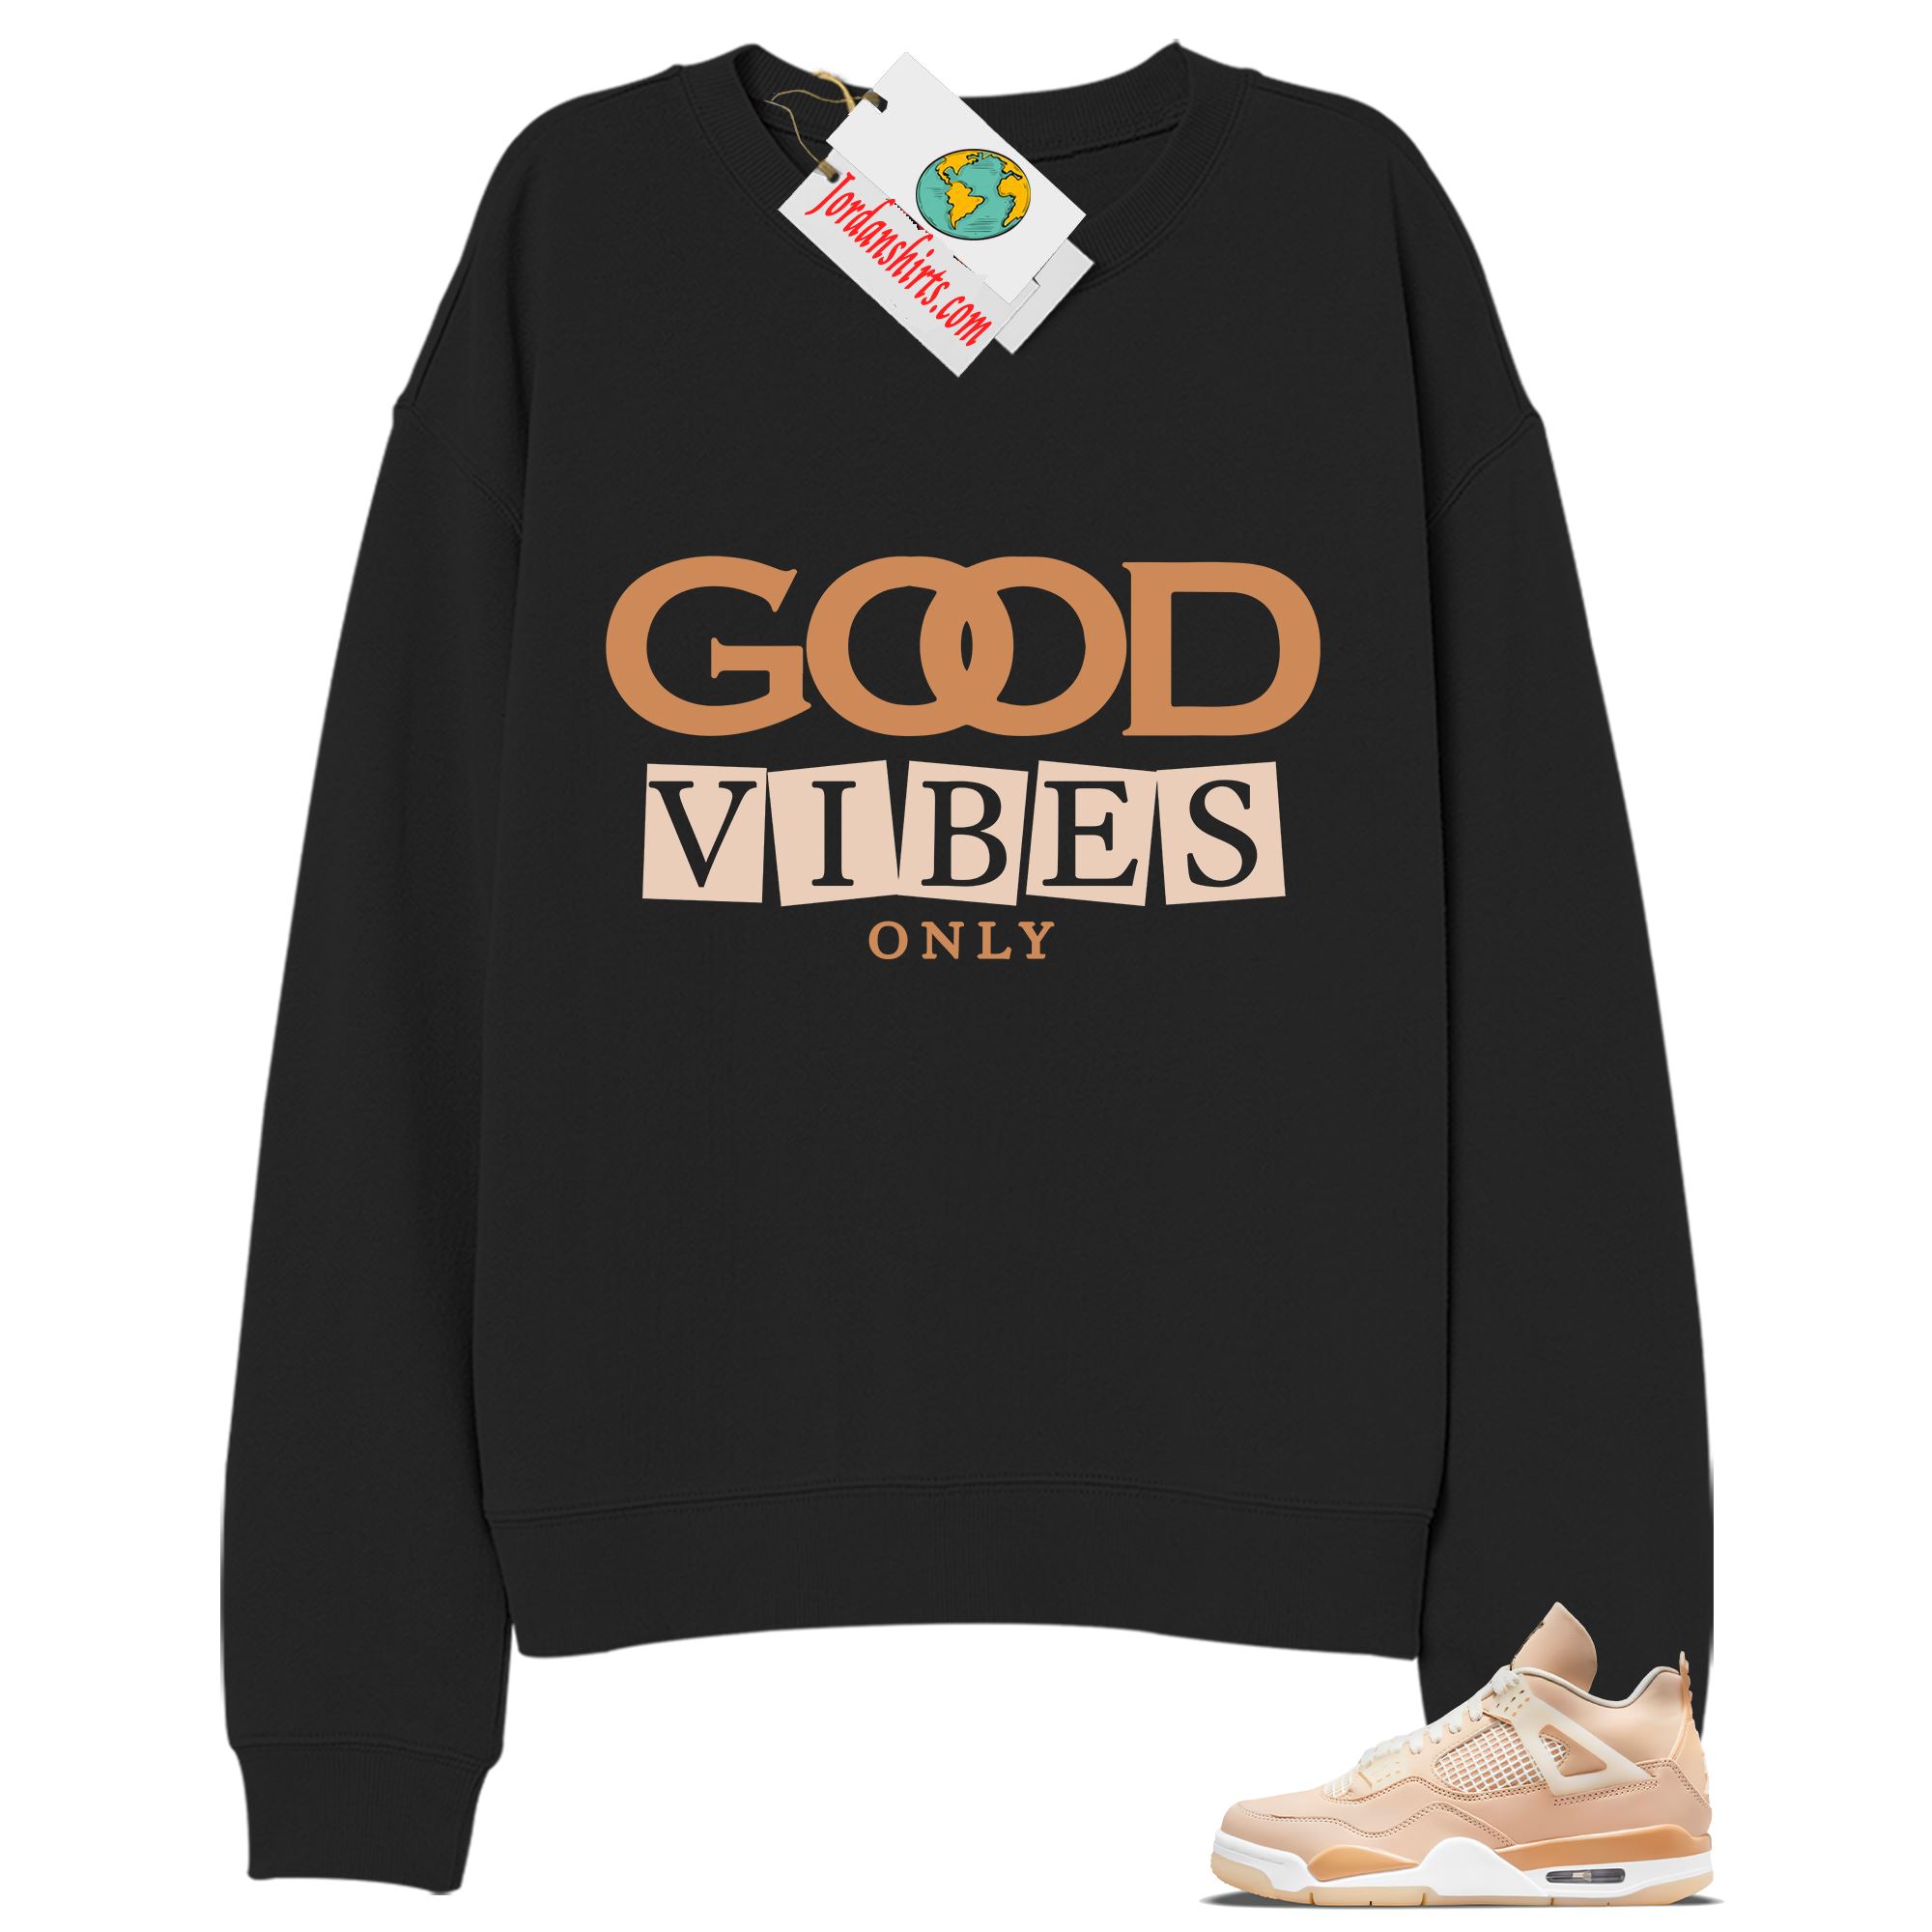 Jordan 4 Sweatshirt, Good Vibes Only Black Sweatshirt Air Jordan 4 Shimmer 4s Full Size Up To 5xl